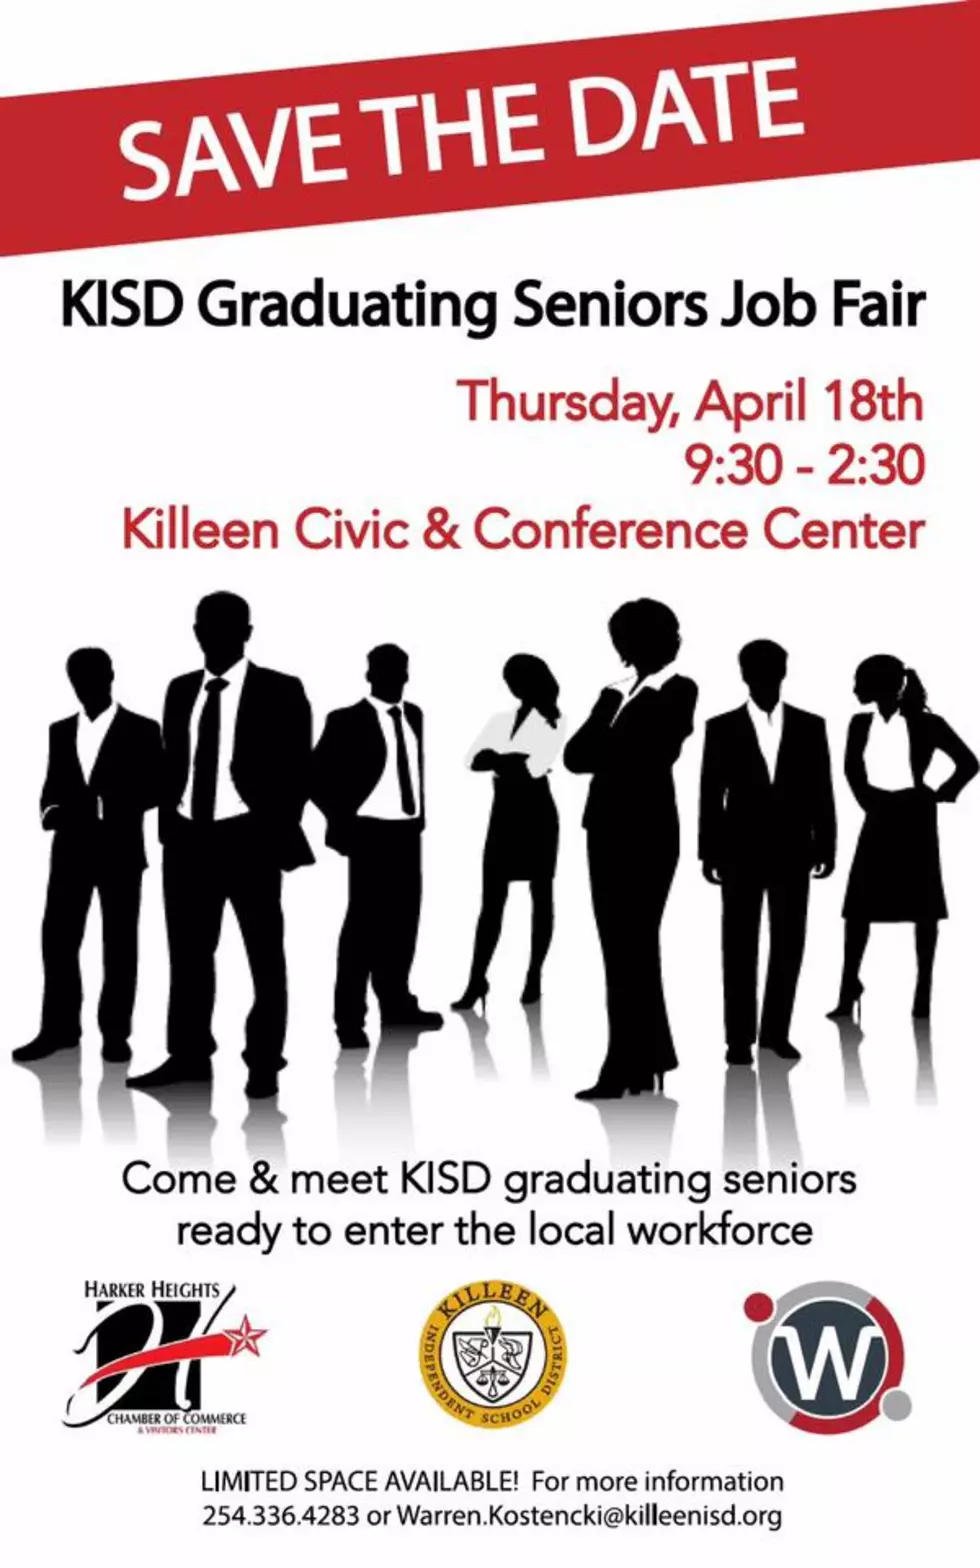 Join The KISD Graduating Seniors Job Fair